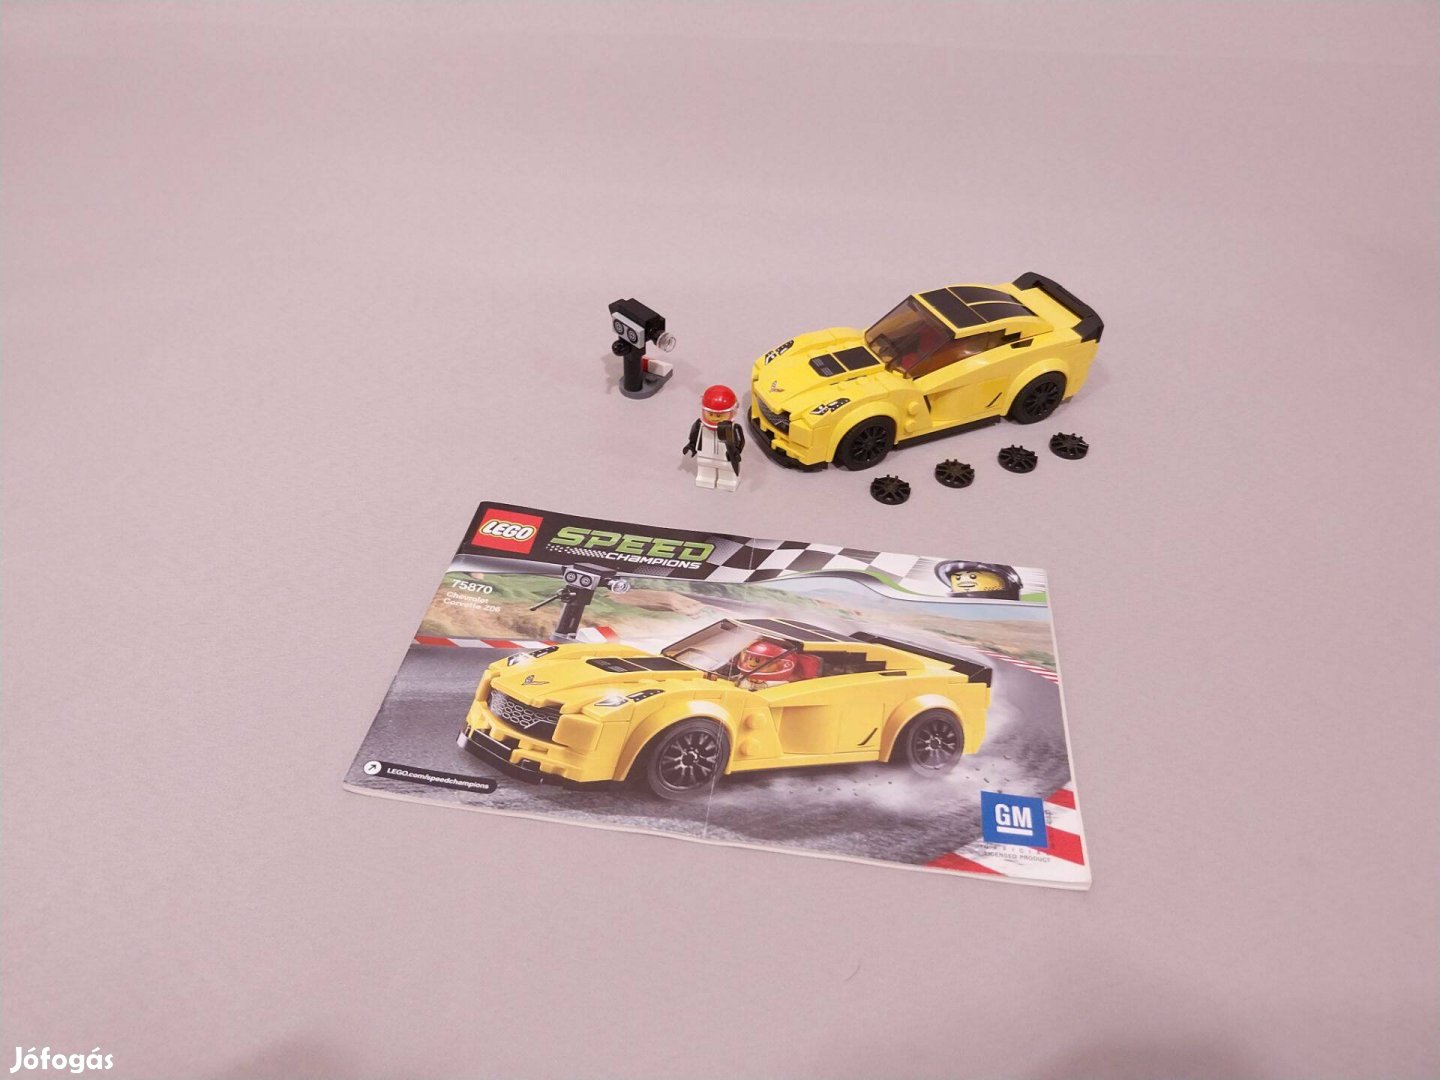 LEGO 75870 Speed Champions Chevrolet Corvette Z06